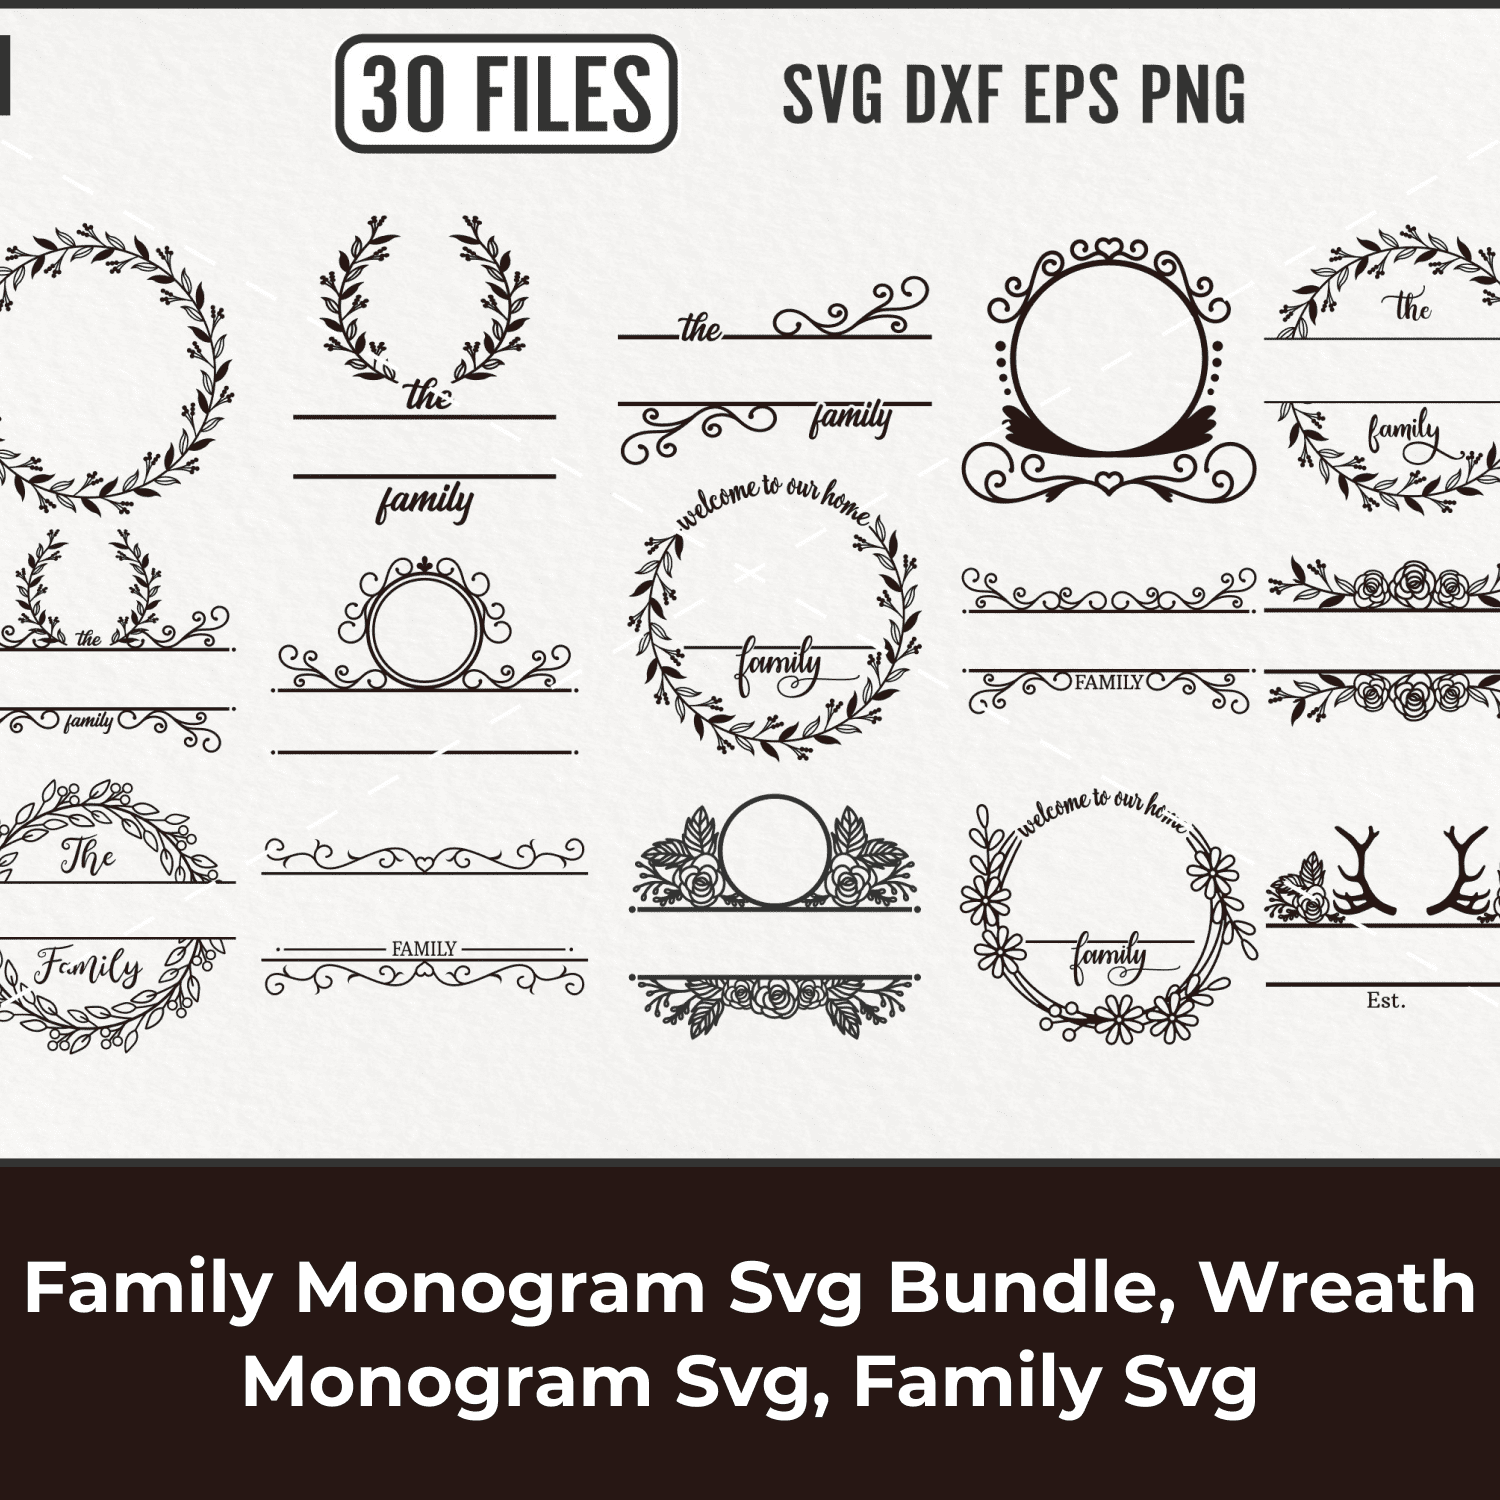 Family Monogram SVG Bundle, Wreath Monogram SVG, Family SVG cover.